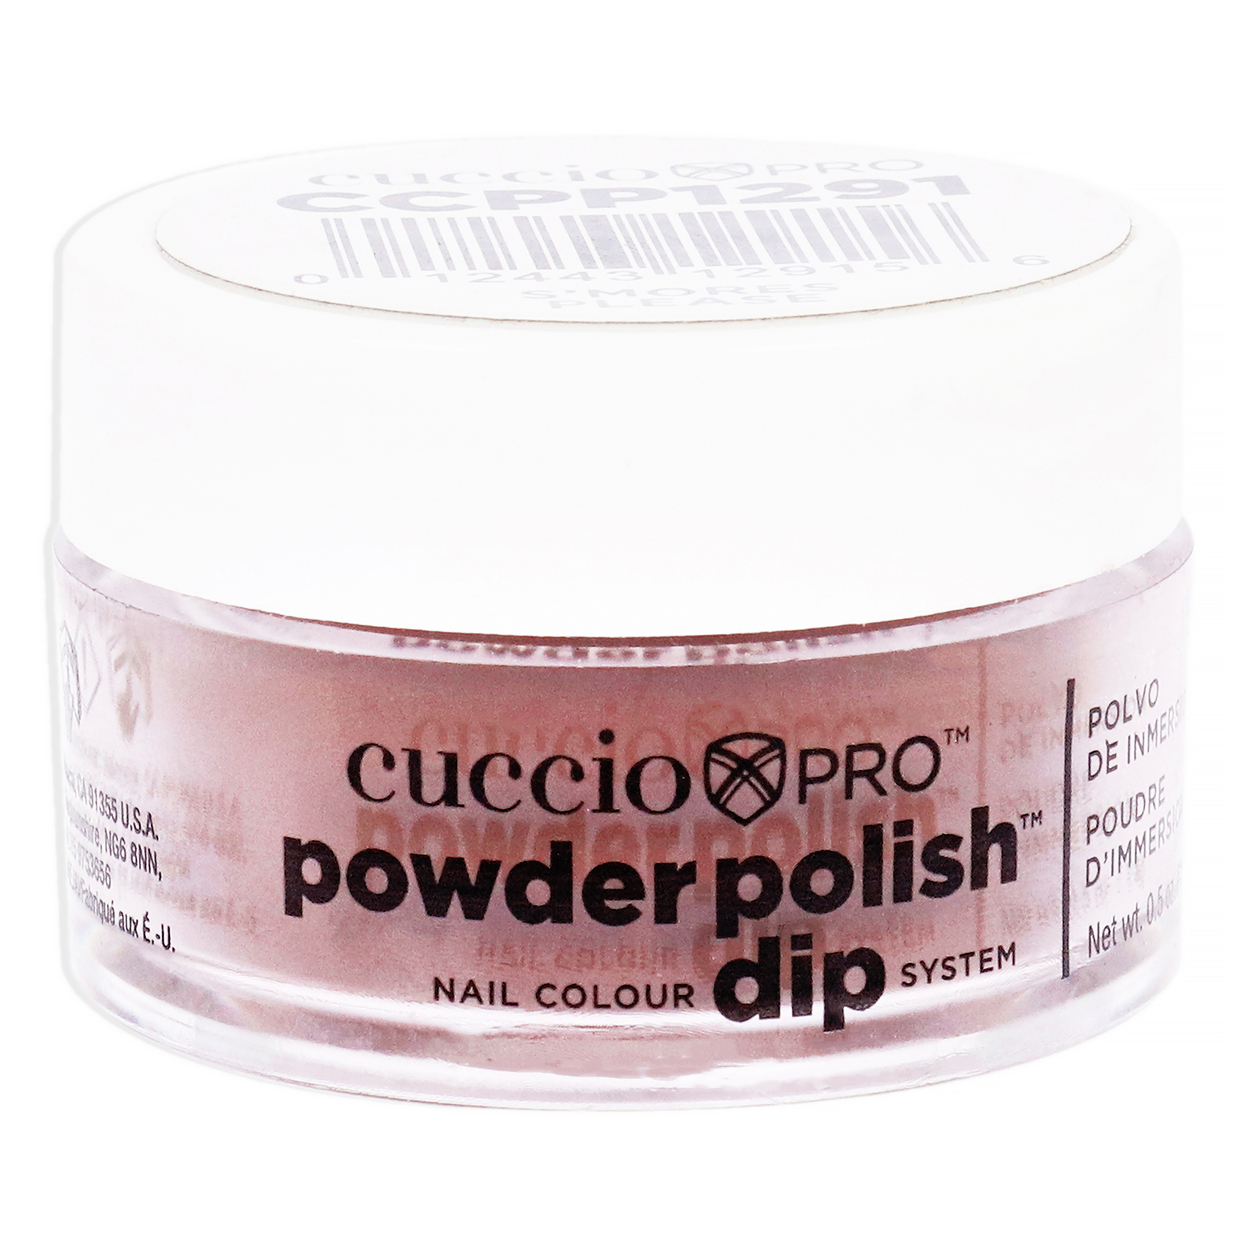 Cuccio Colour Pro Powder Polish Nail Colour Dip System - Smore Please Nail Powder 0.5 Oz